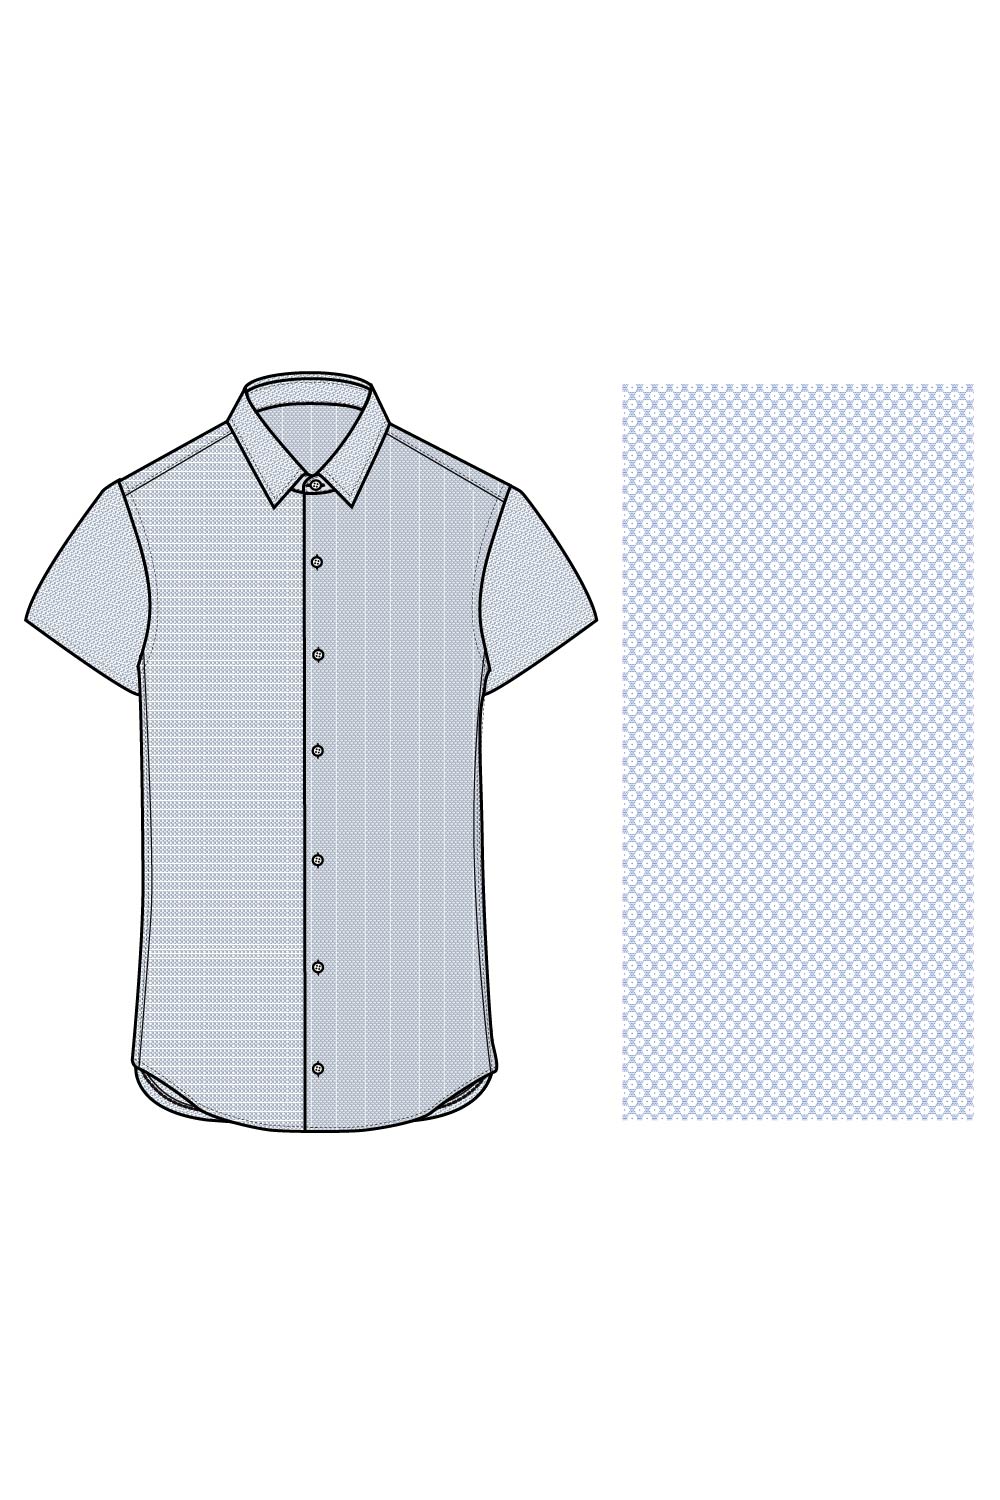 Shirt Design pinterest preview image.